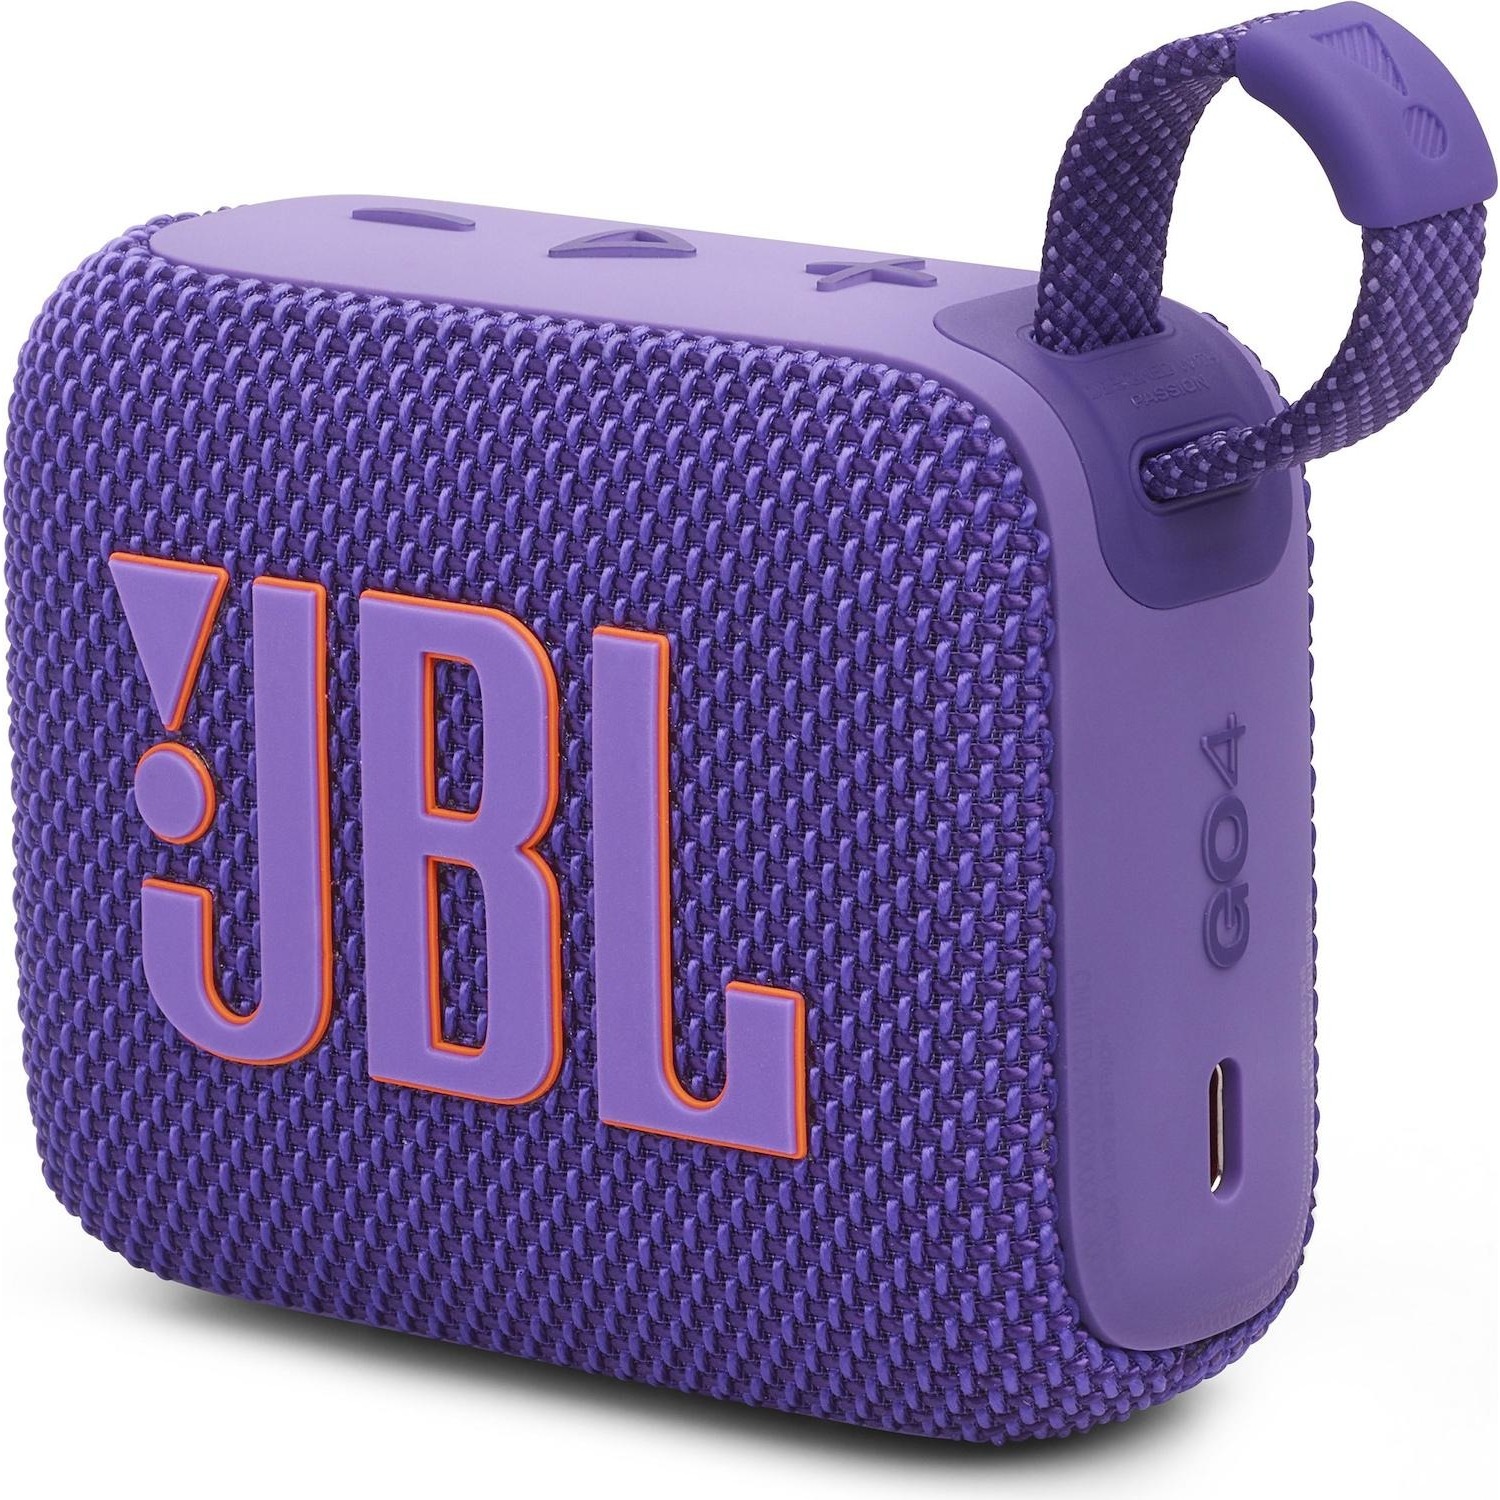 Immagine per Speaker bluetooth JBL Go 4 colore purple da DIMOStore